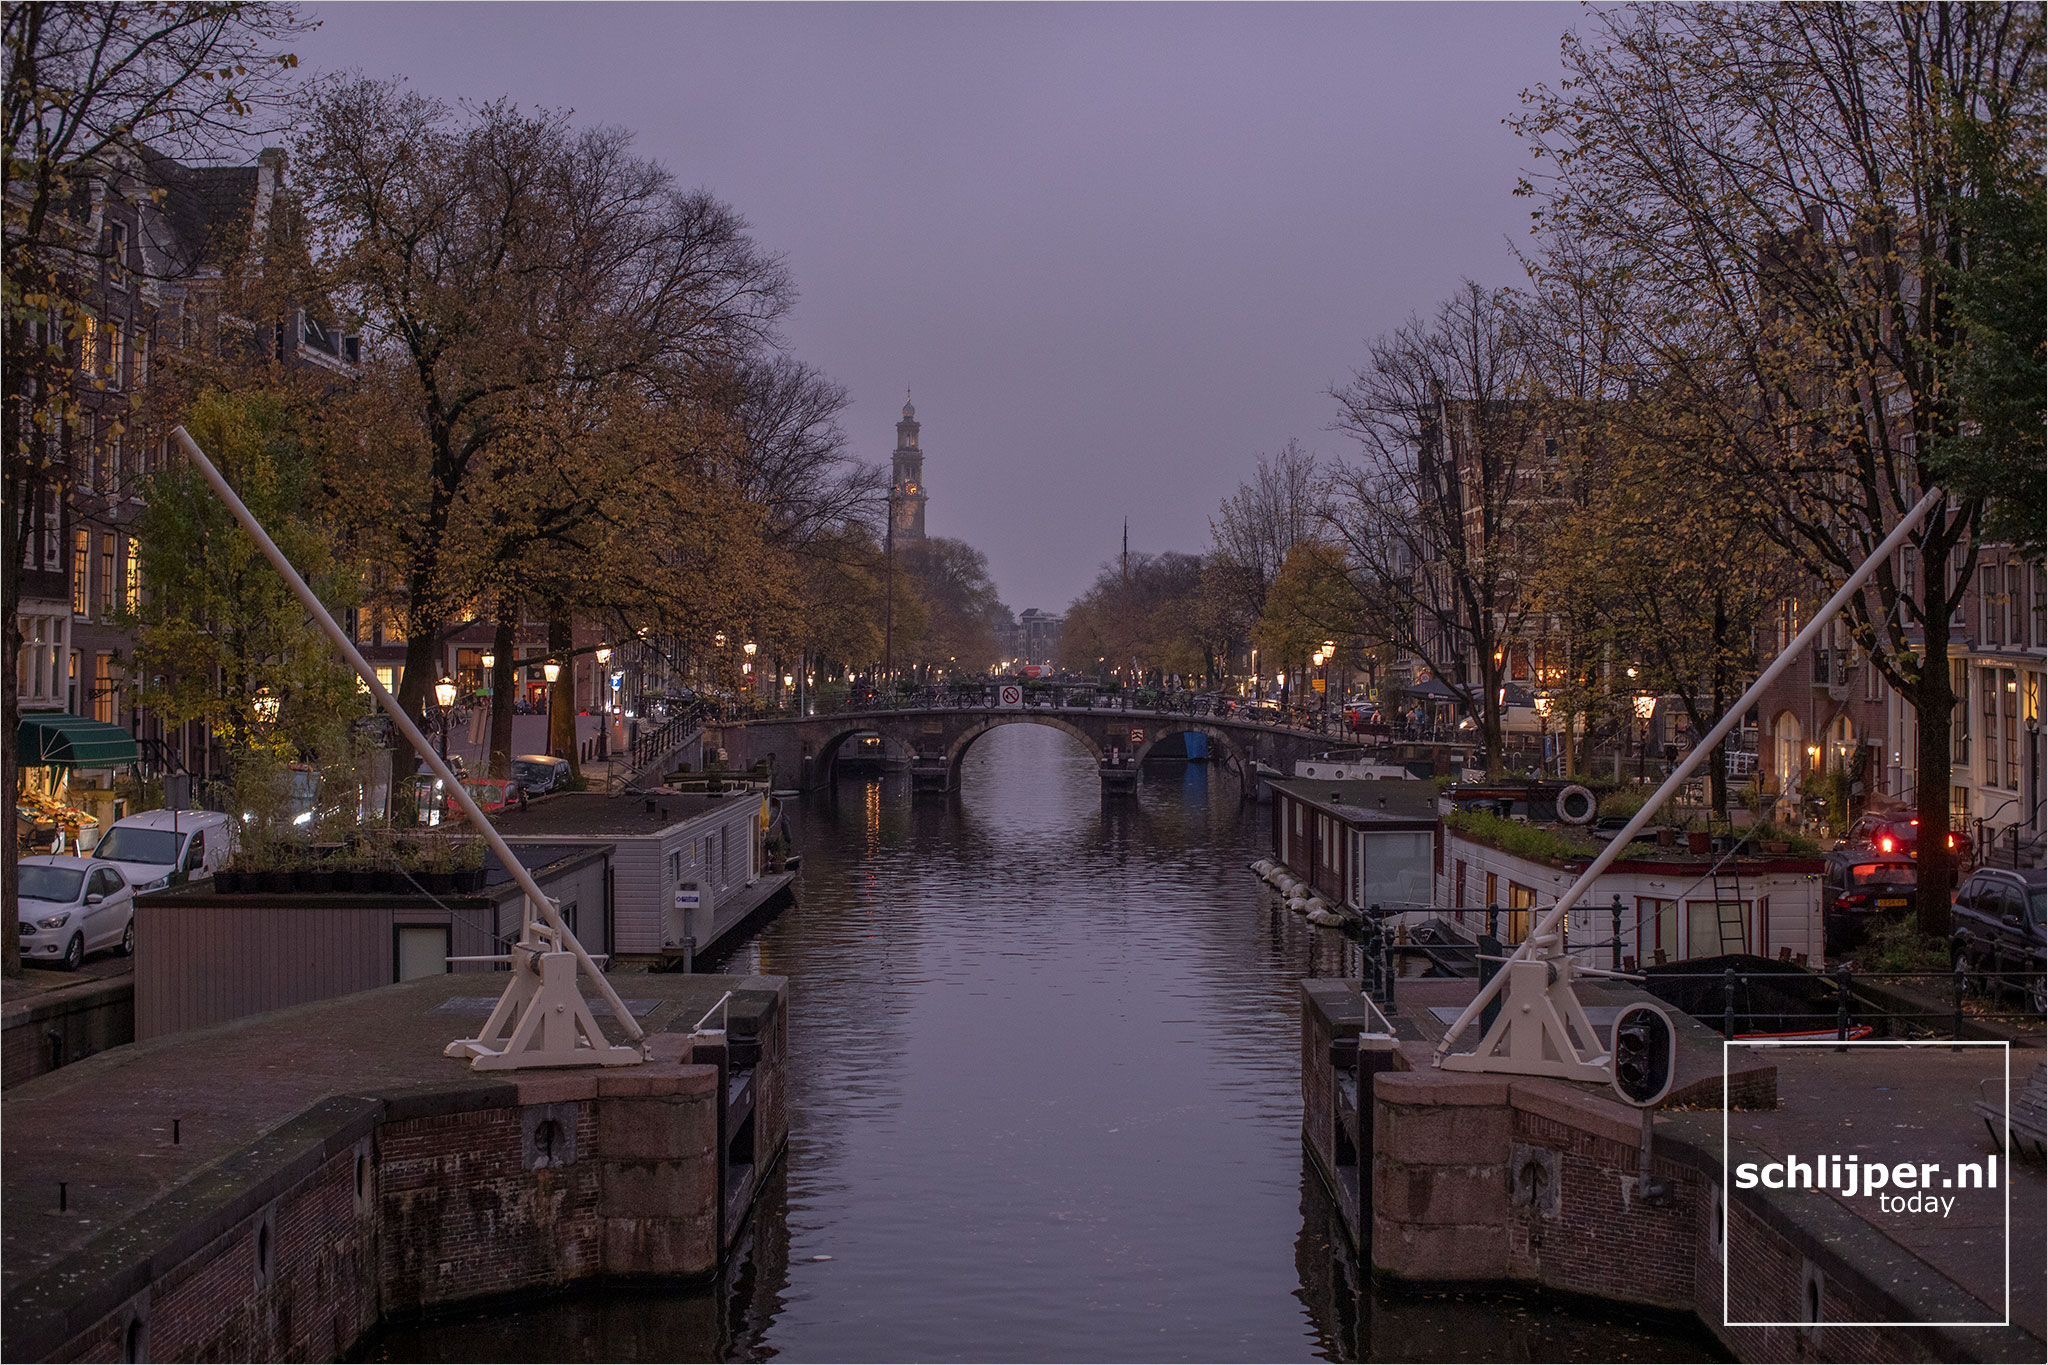 The Netherlands, Amsterdam, 9 november 2021